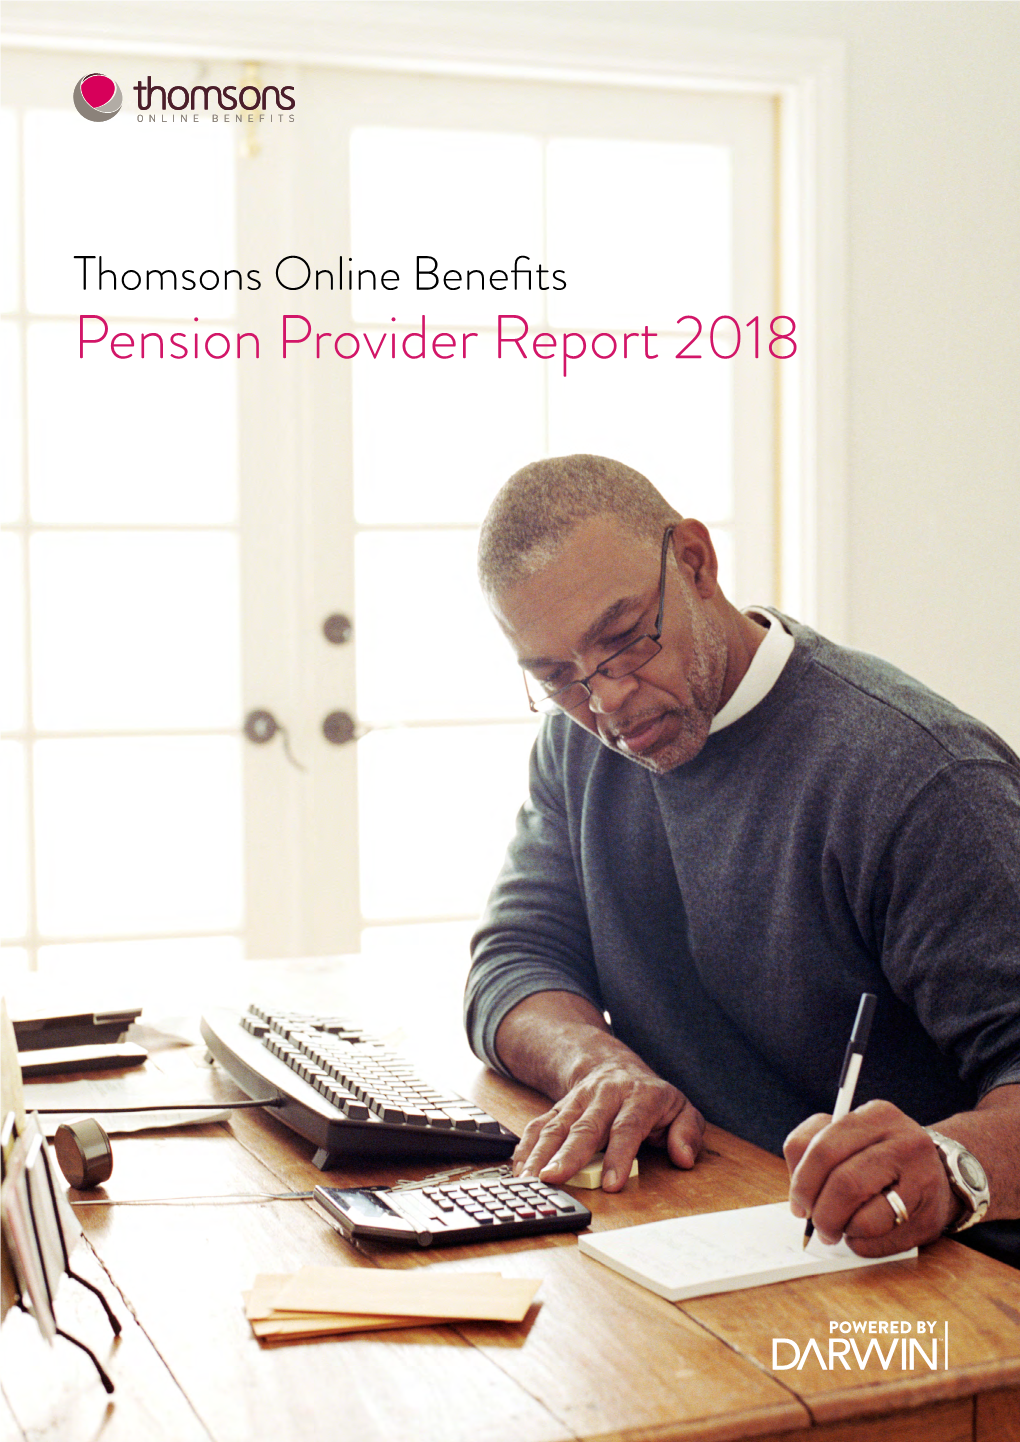 Pension Provider Report 2018 Contents